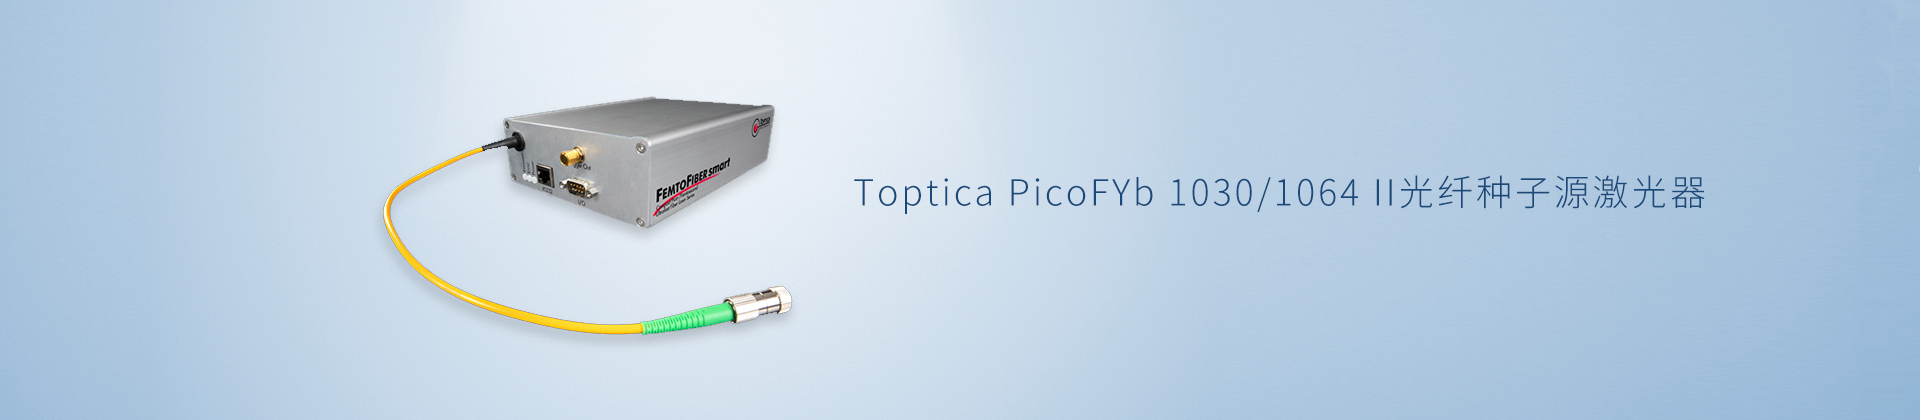 Toptica PicoFYb 1030/1064 II光纤种子源激光器